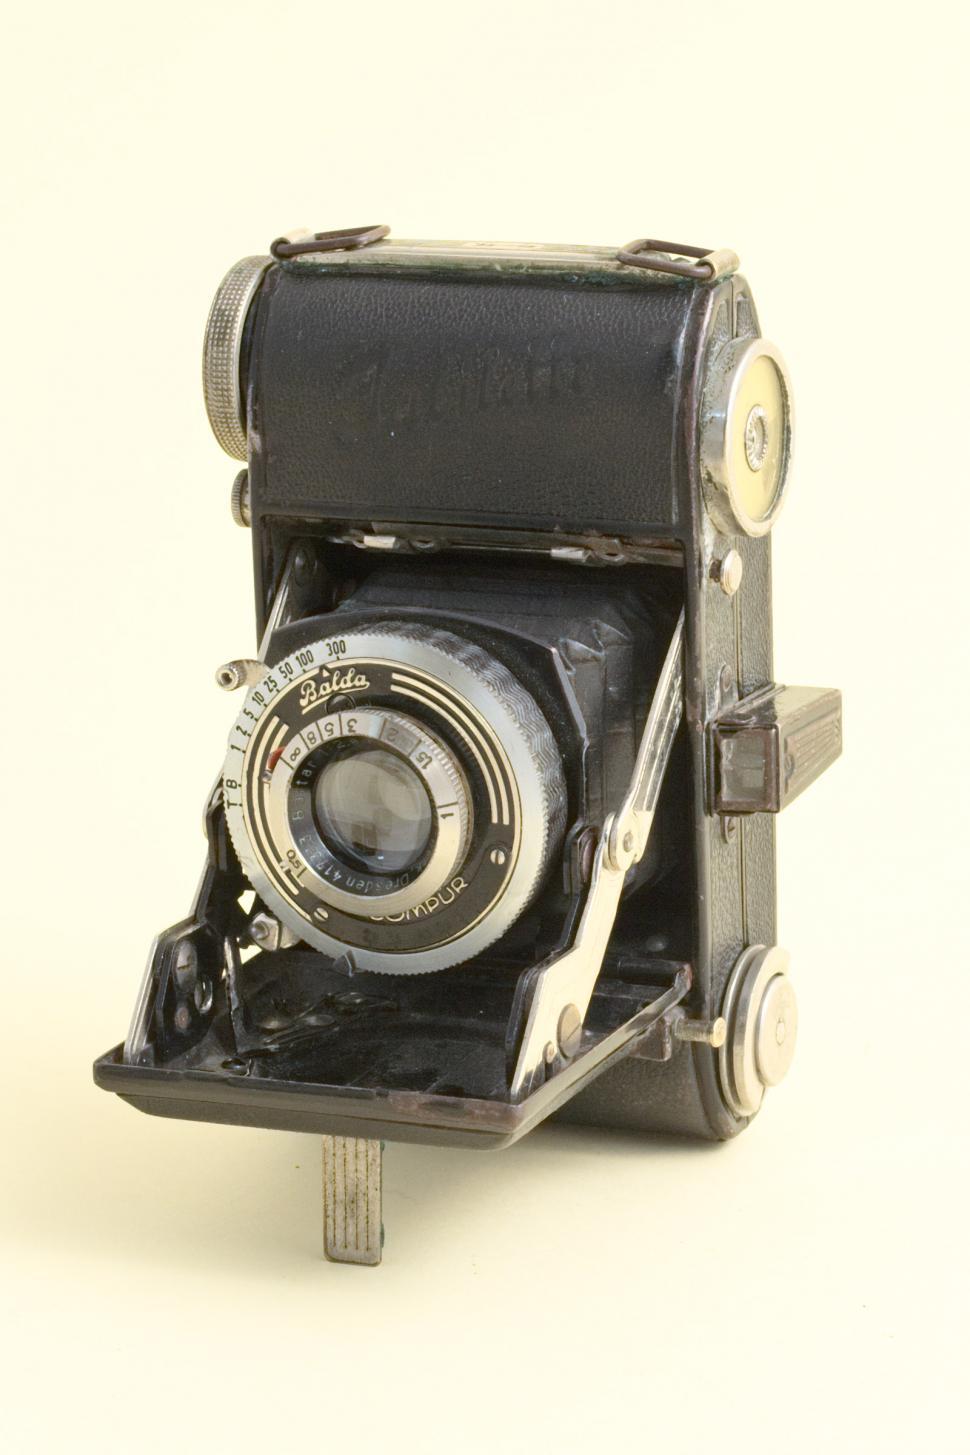 Free Image of Old camera 